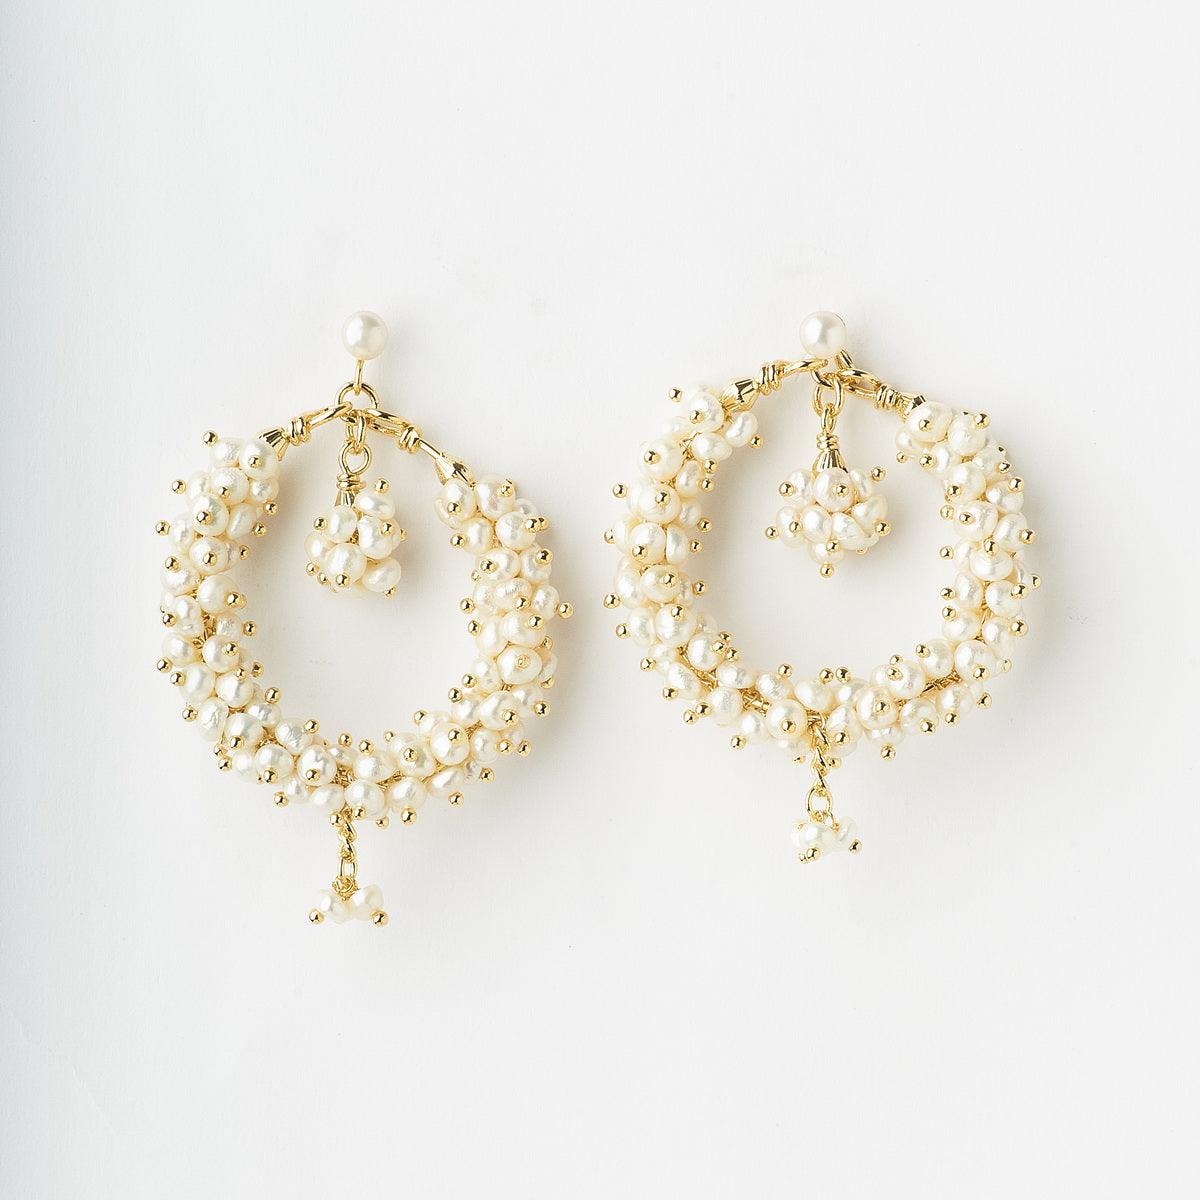 Beautiful Banjara Pearl Earring - Chandrani Pearls